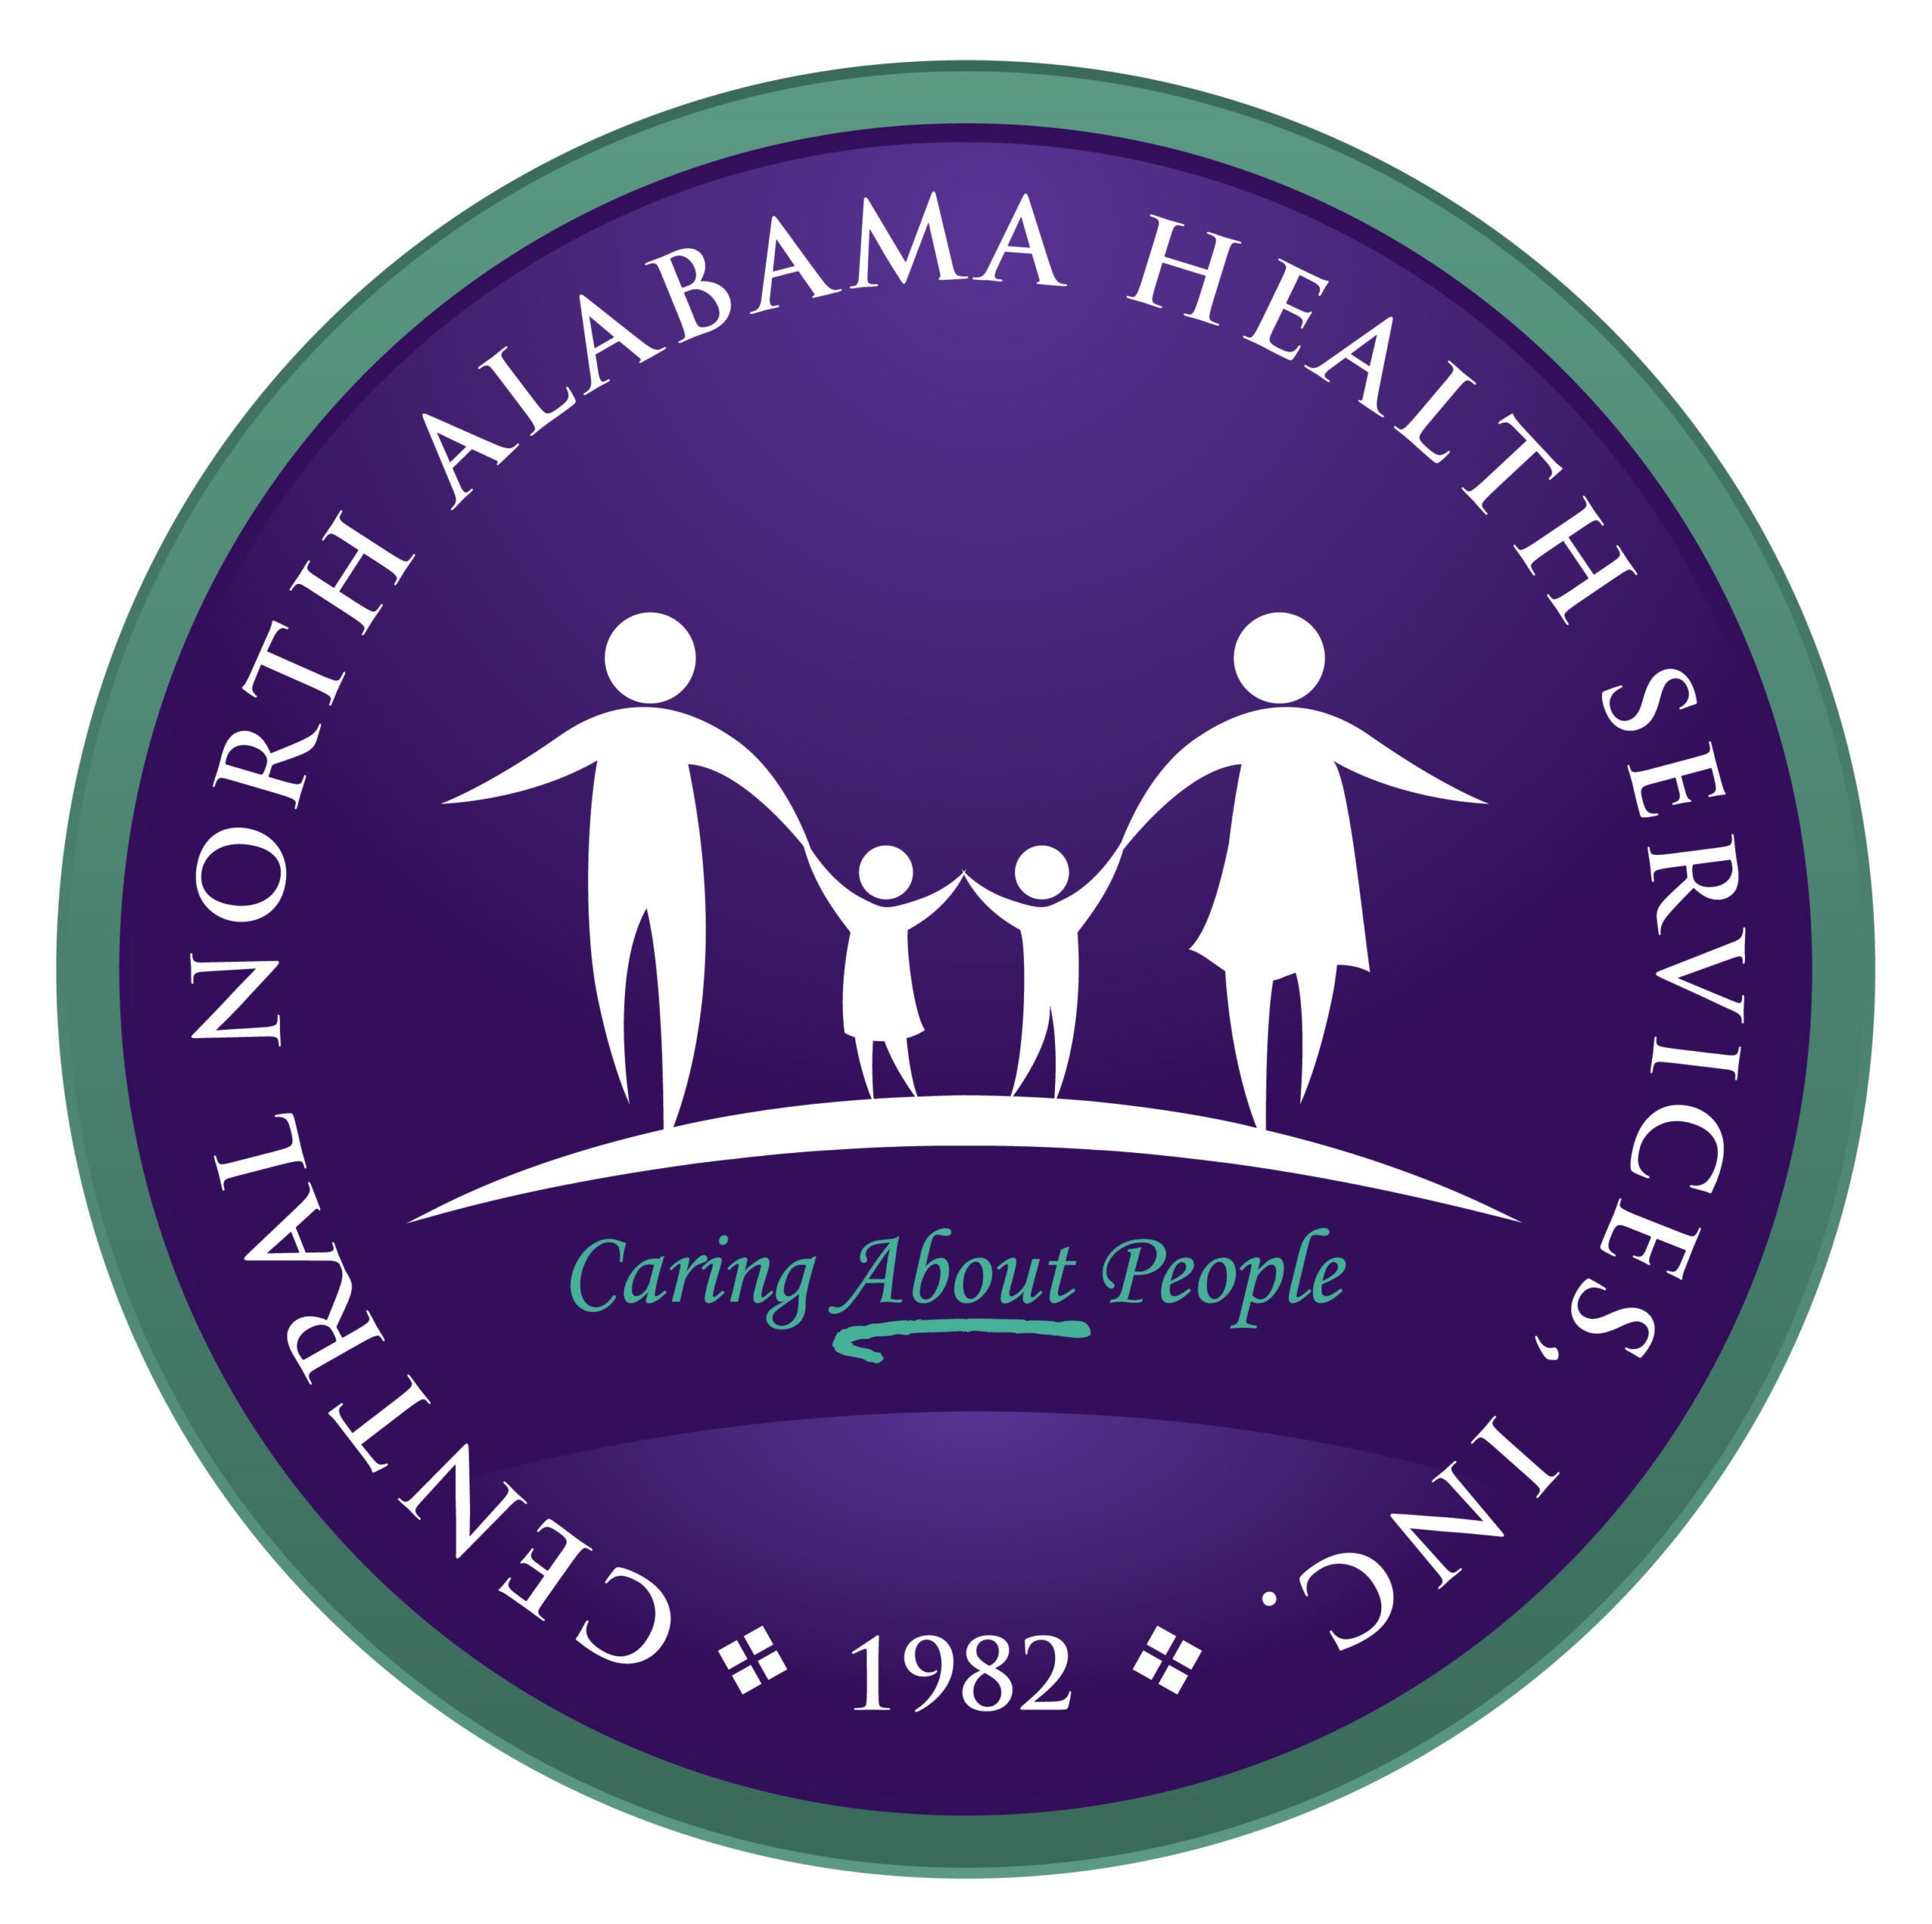 Central North Alabama Health Services, Inc